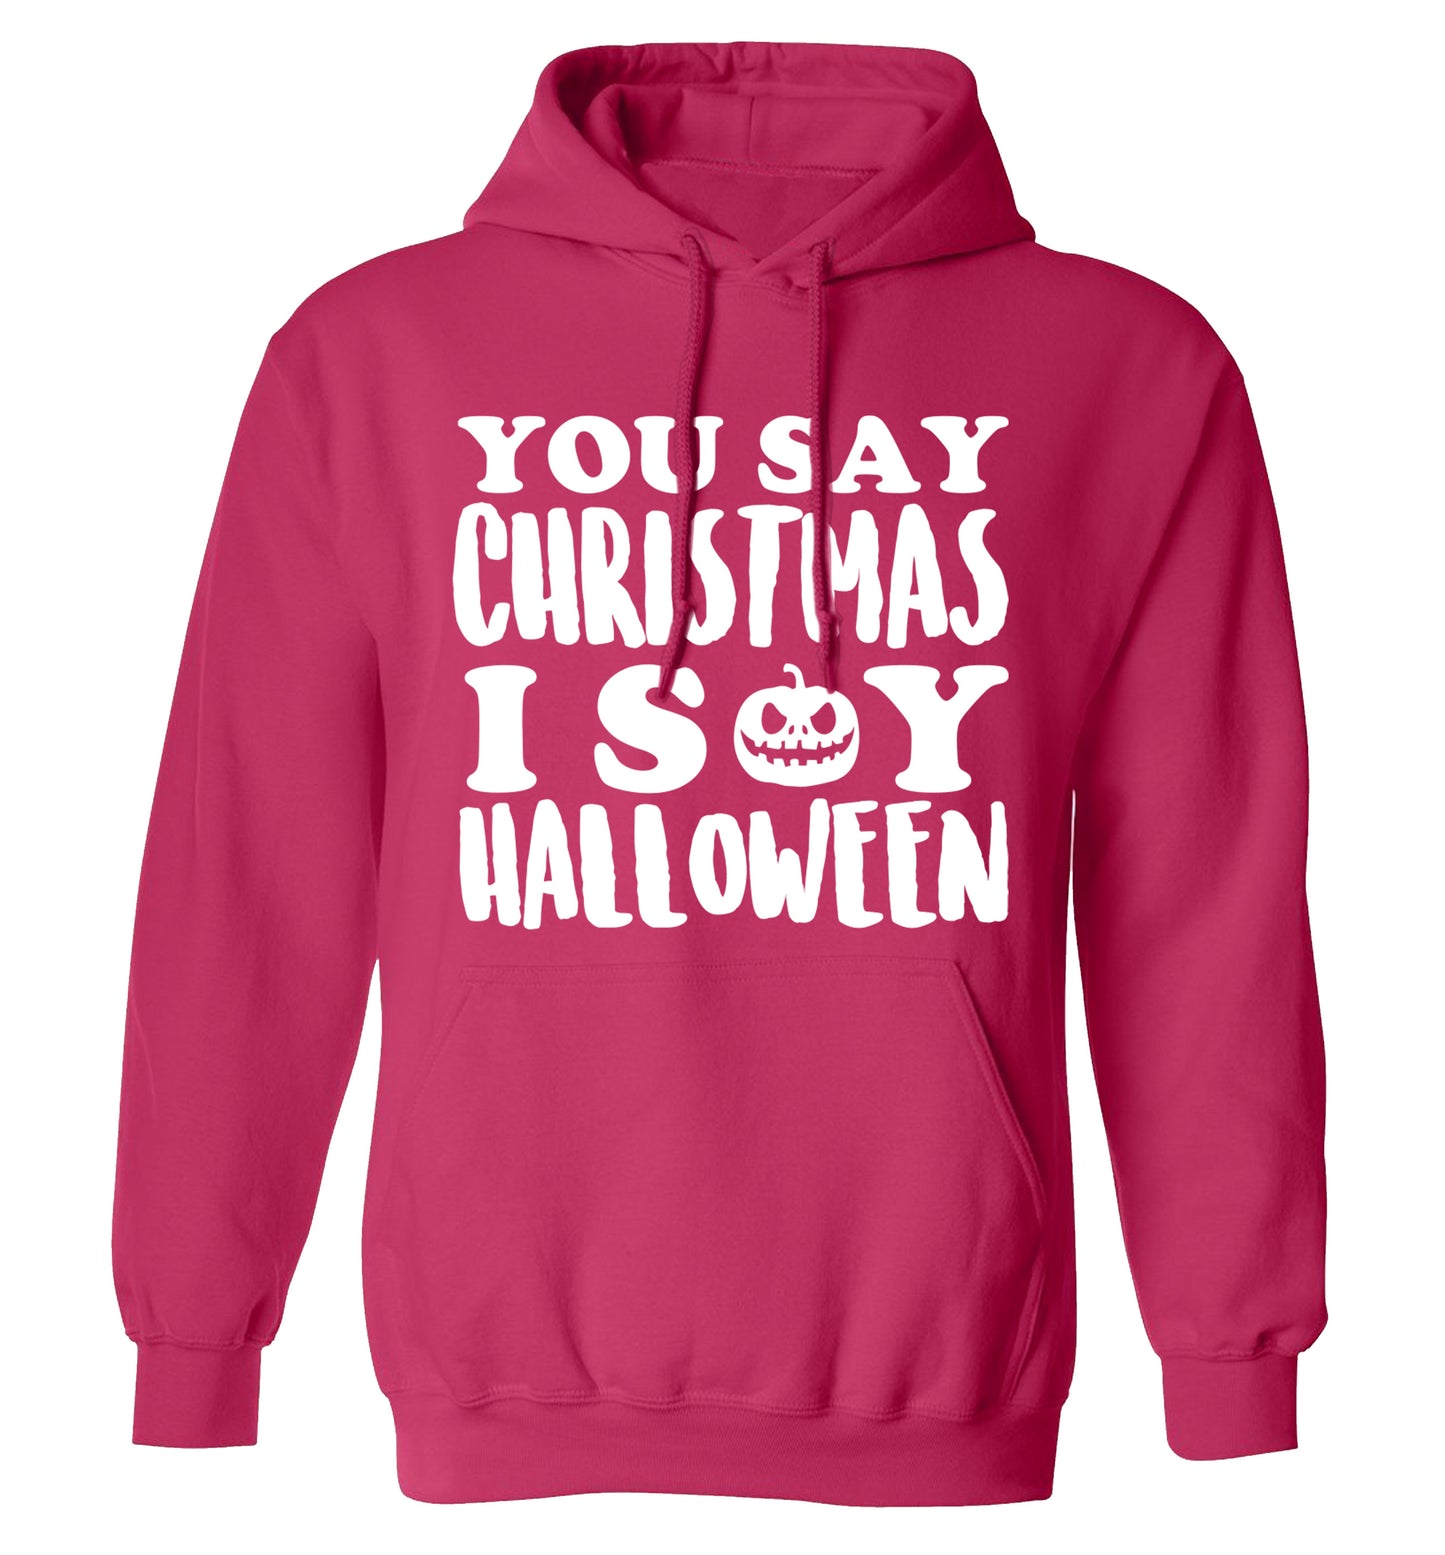 You say christmas I say halloween! adults unisex pink hoodie 2XL